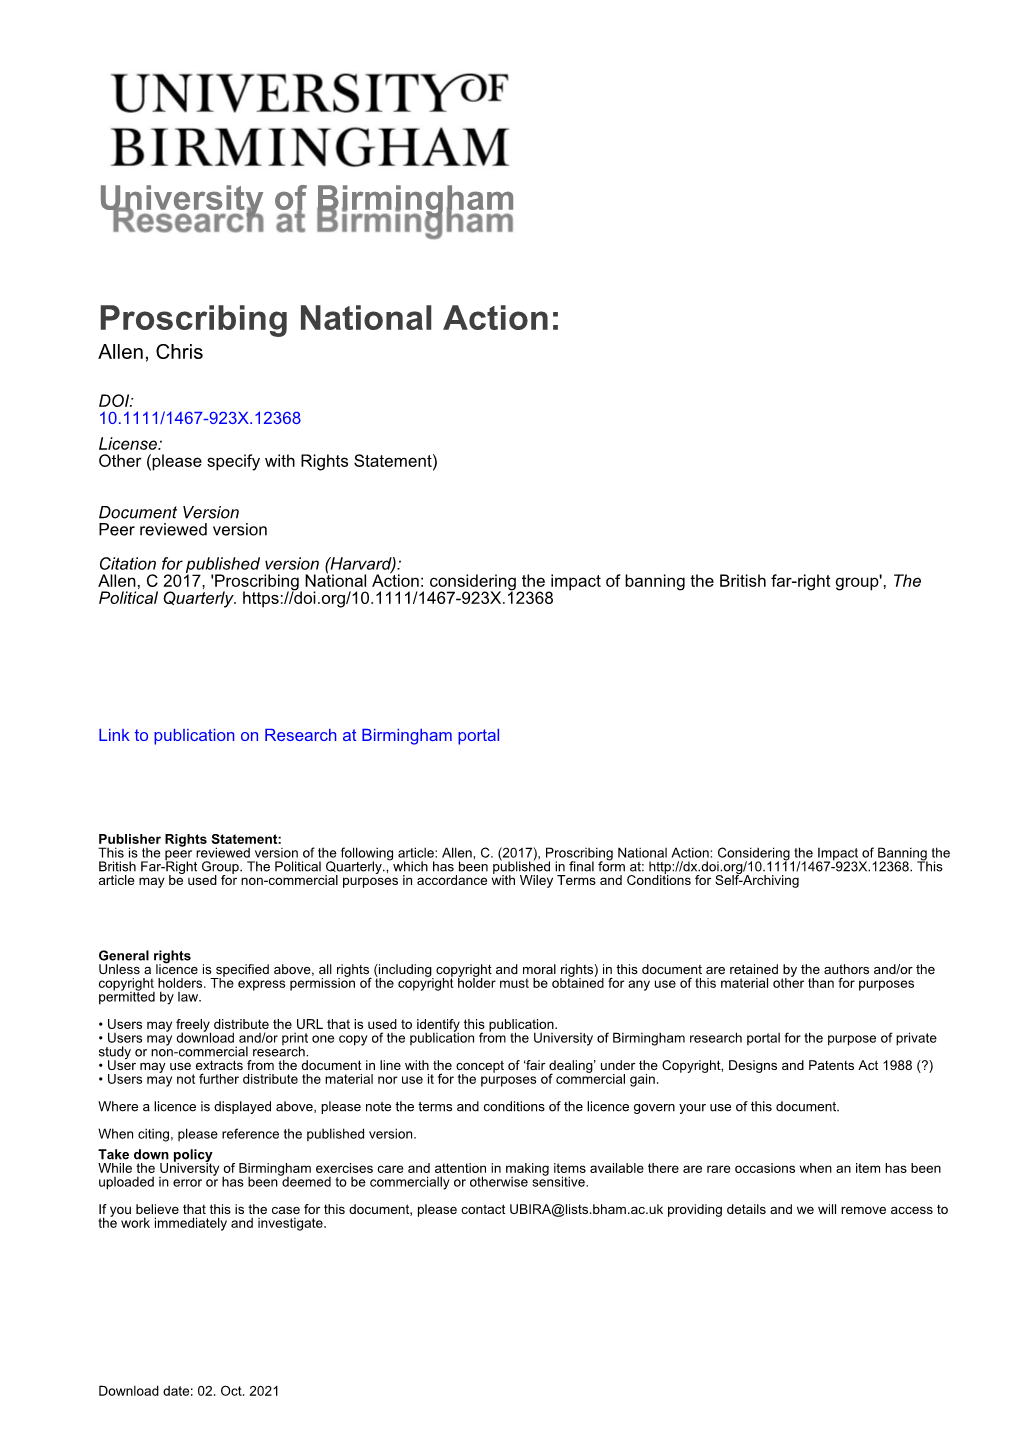 University of Birmingham Proscribing National Action